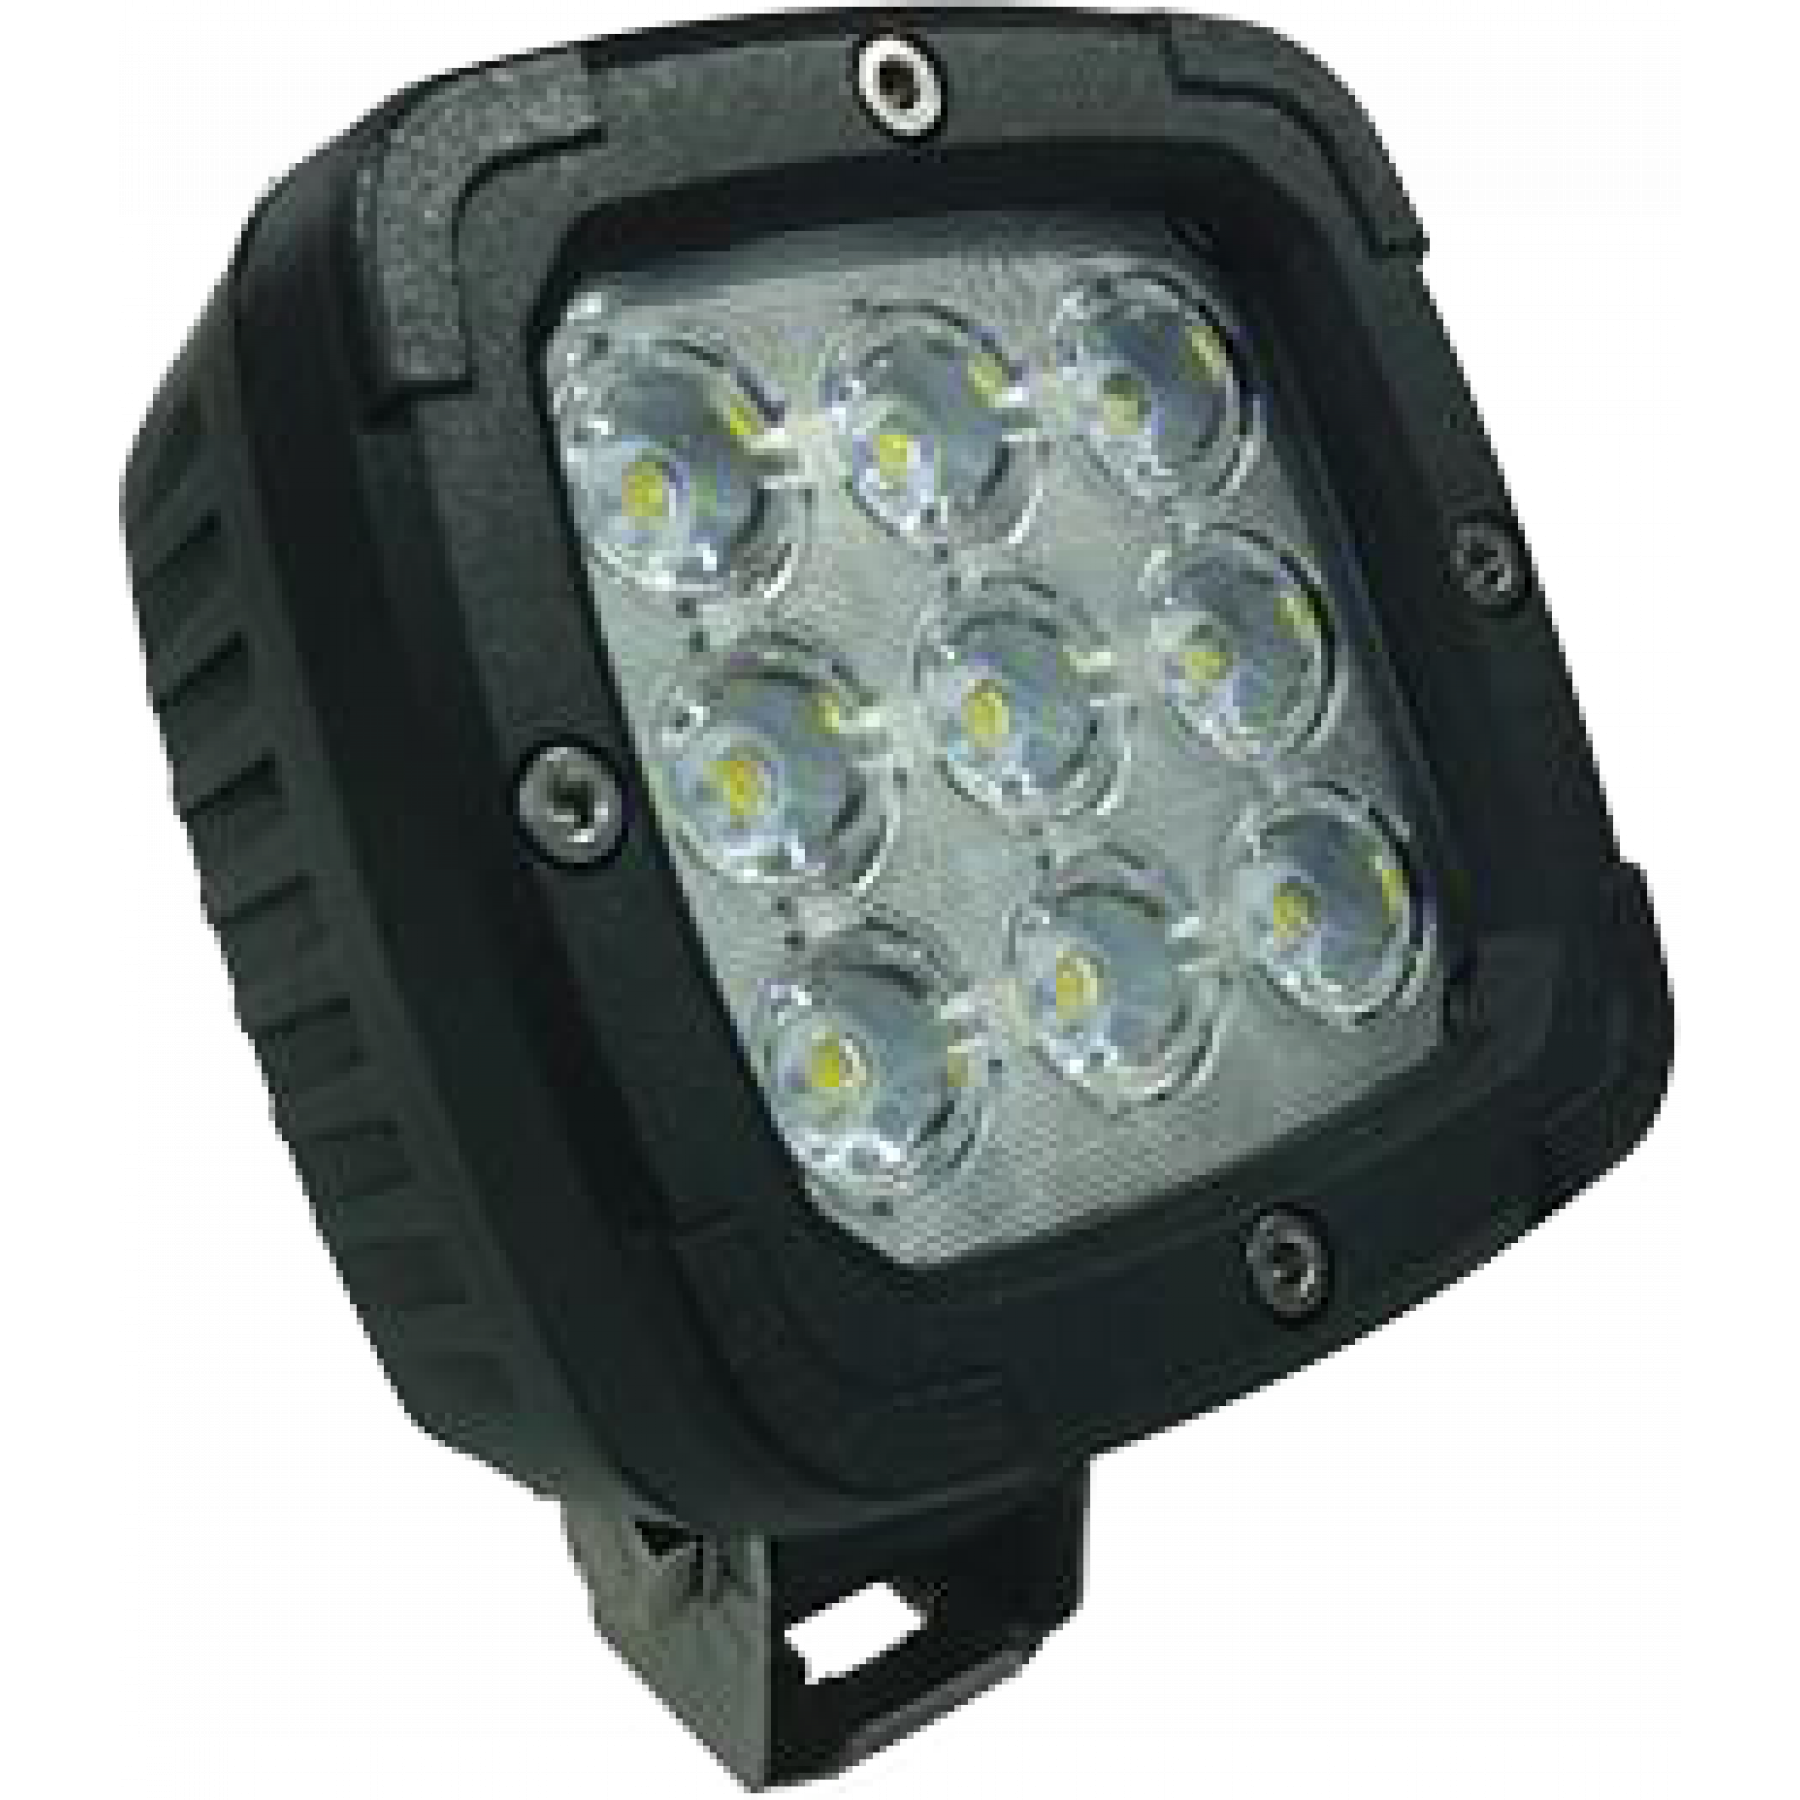 Zeg opzij element Stapel LED werklamp 9 leds 2800LM Deutsch zwart in LED Werklampen vierkant /  rechthoekig